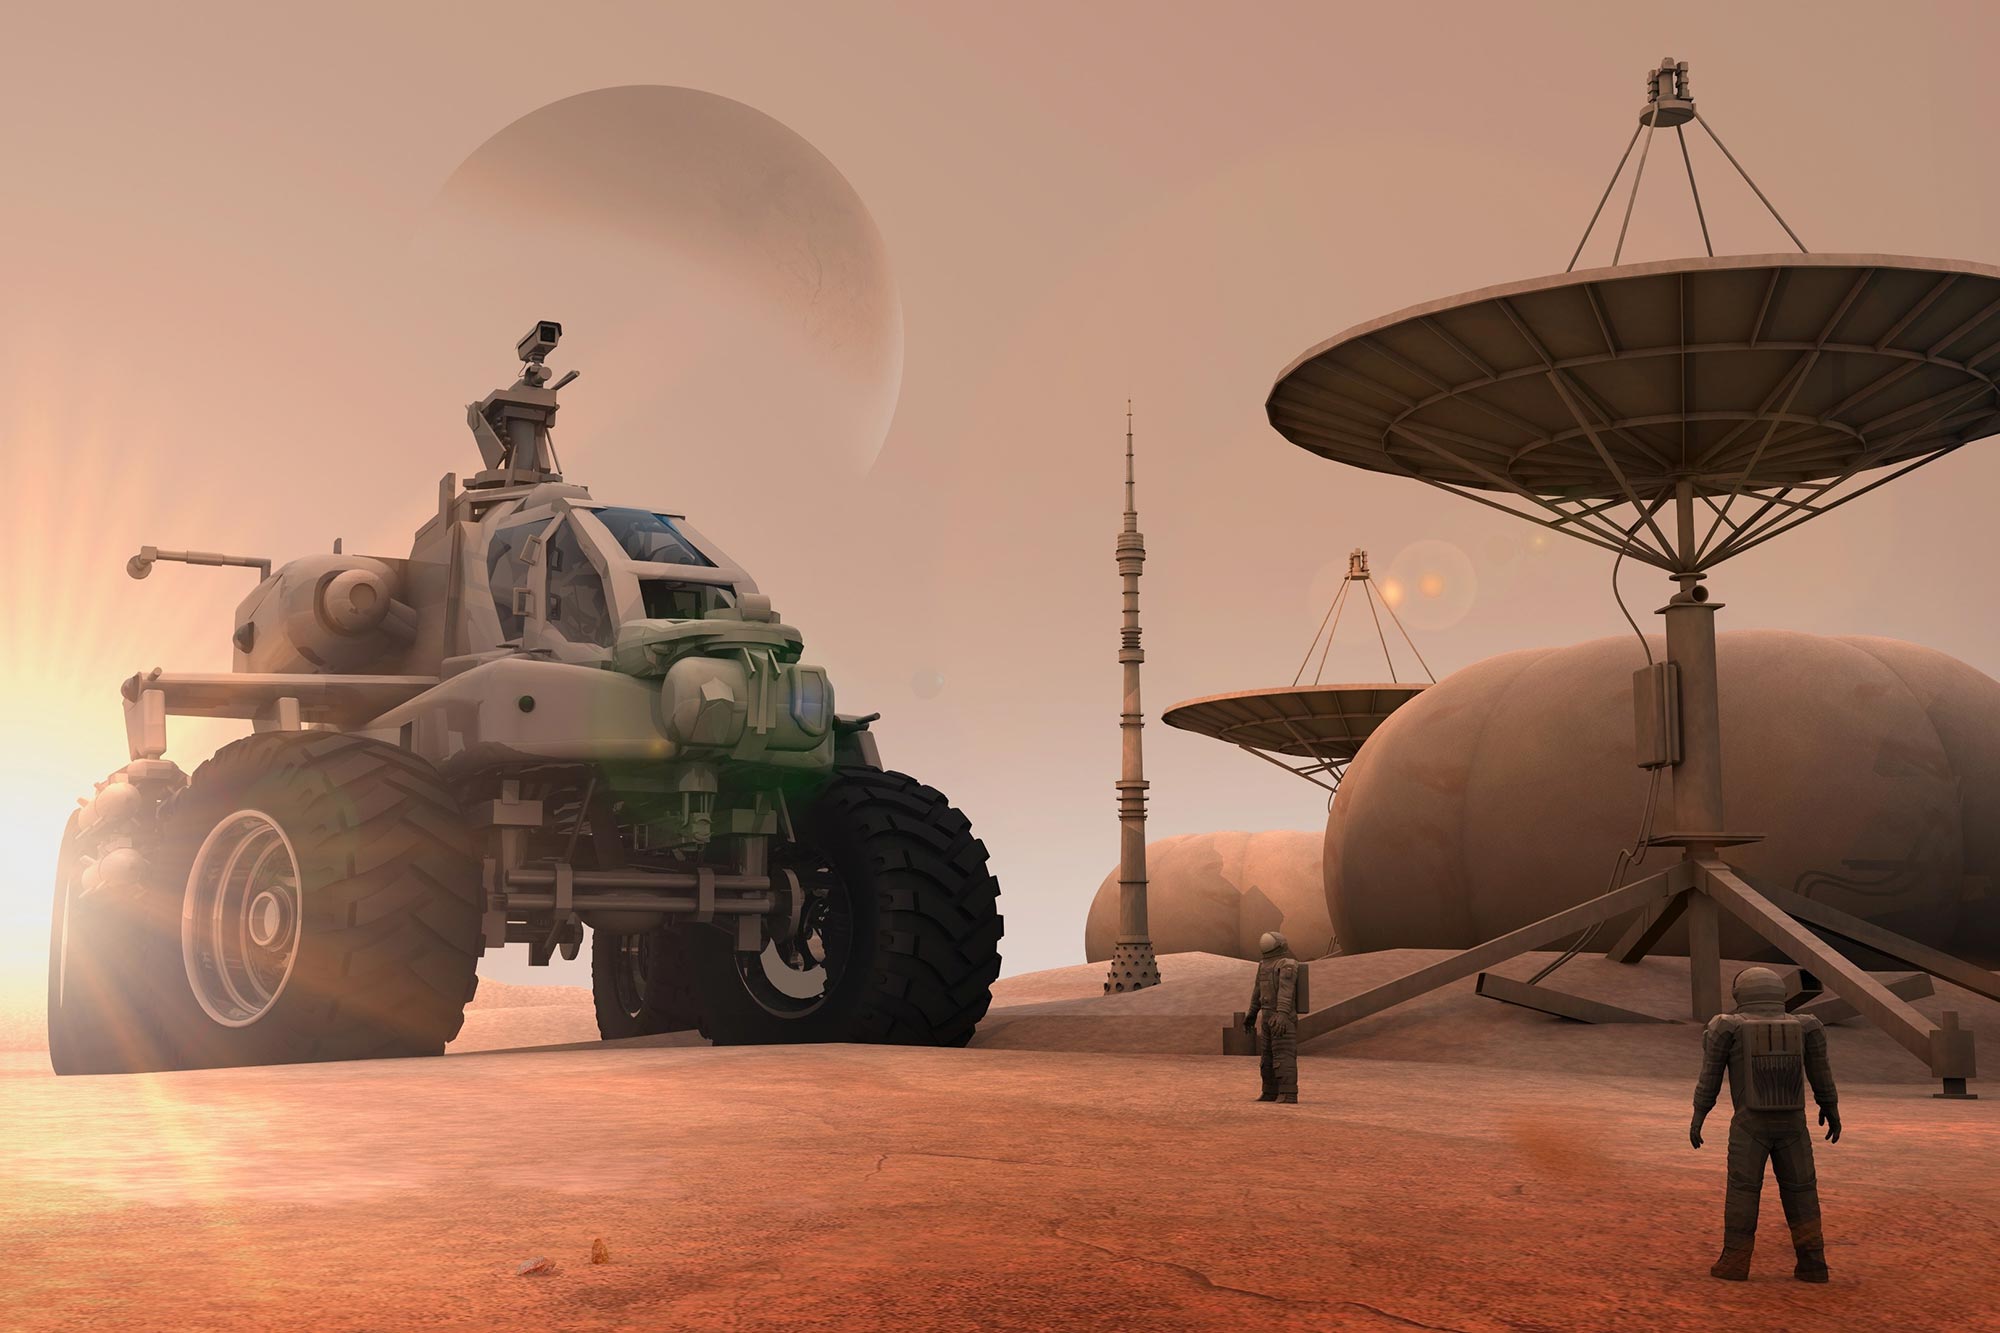 Using Microbes To Make Martian Rocket BioFuel on Mars